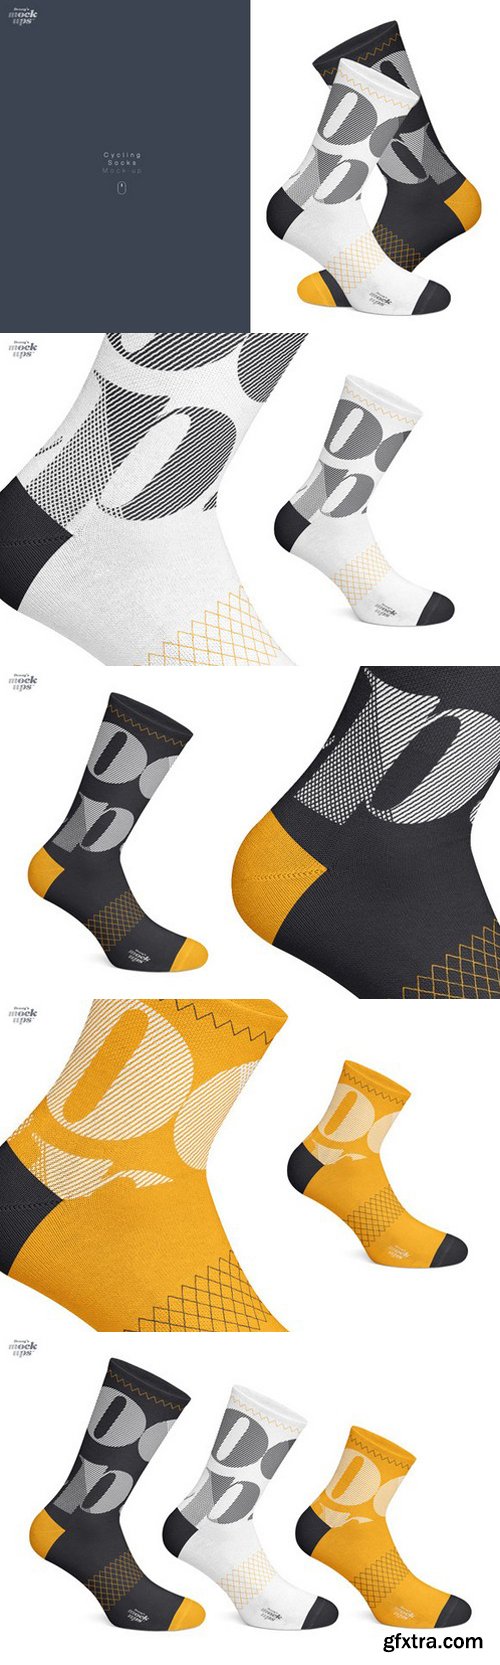 CM - Cycling Socks 3 Types Mockup 637092